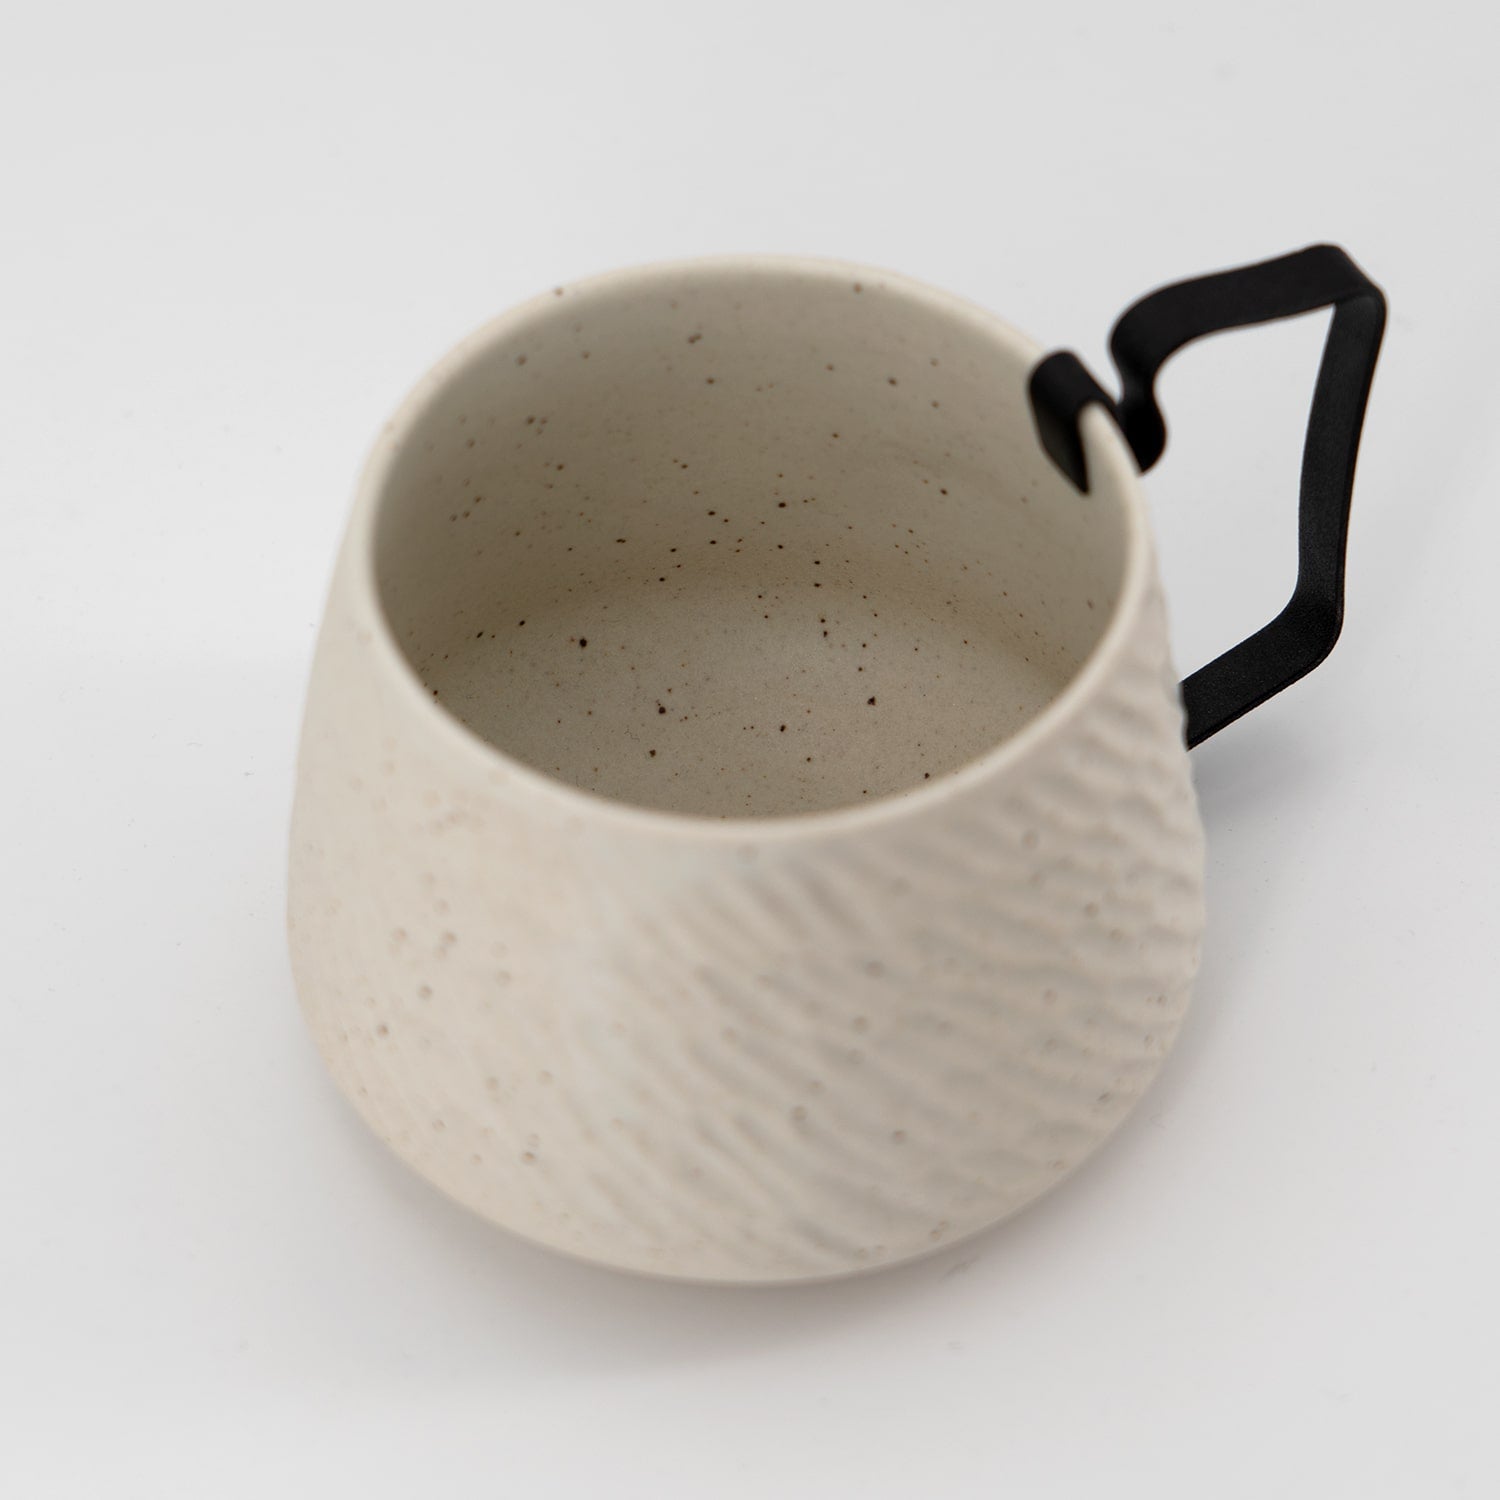 Hic Ceramics ceramic mug with Teflon handle